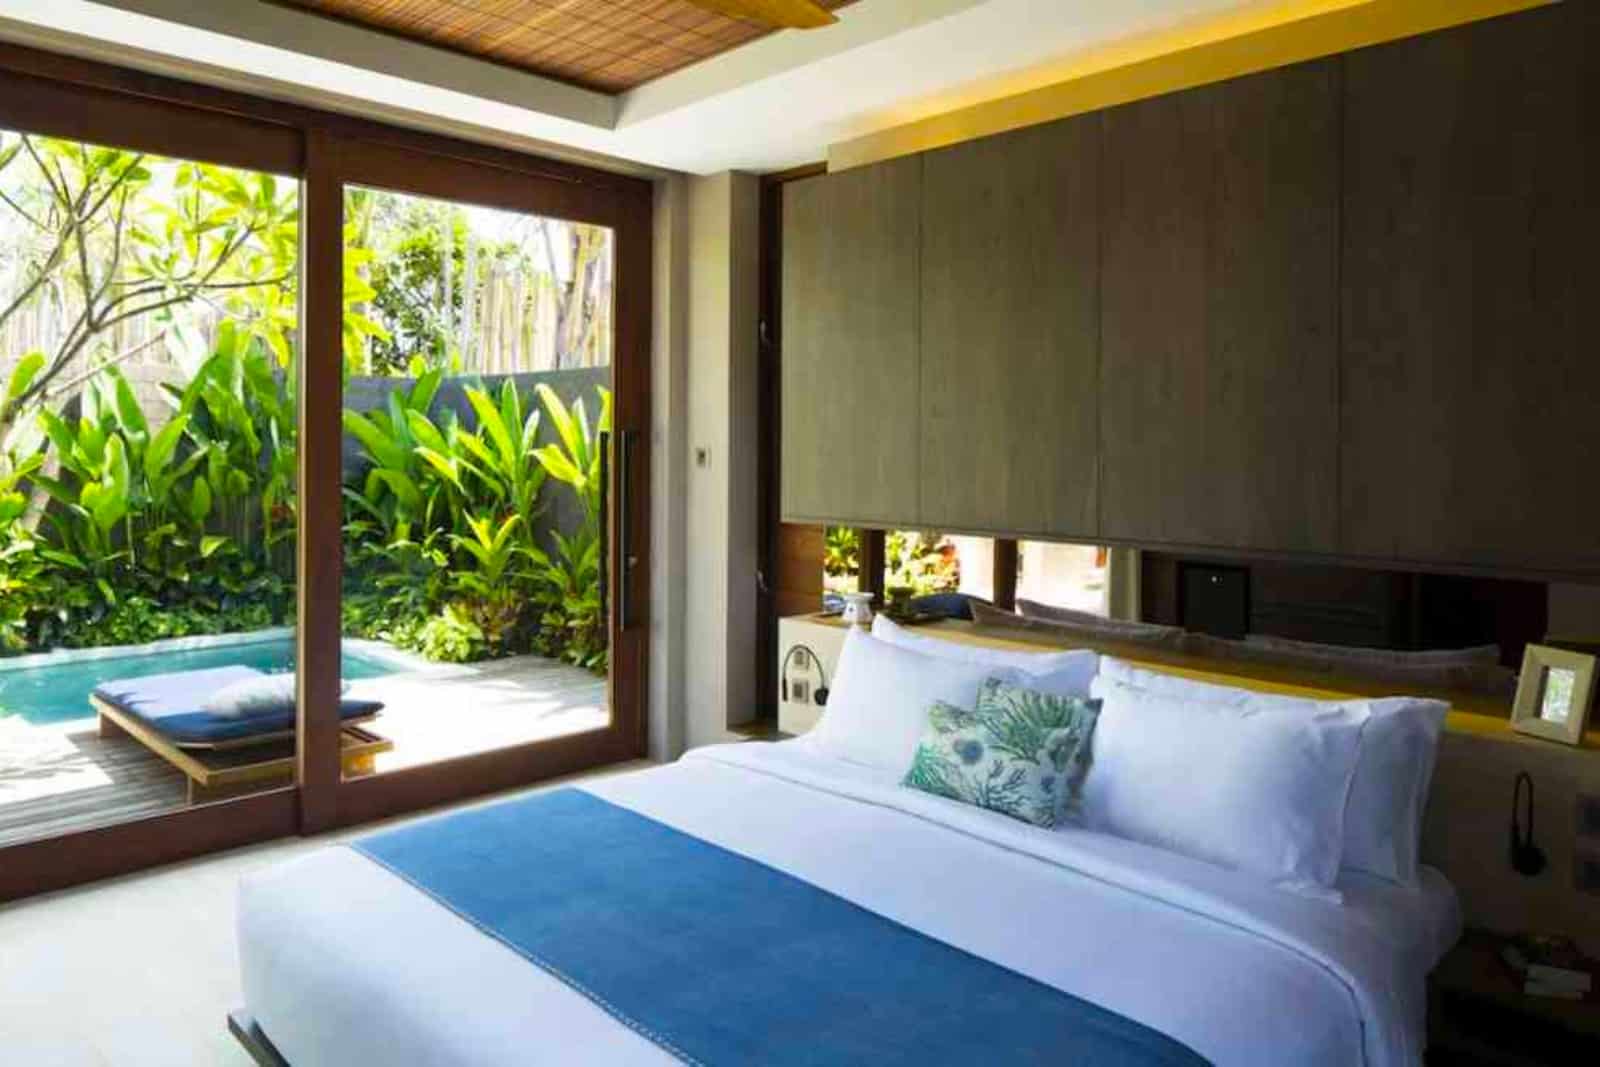 Bedroom lush views of private pool in Bali resort 2024